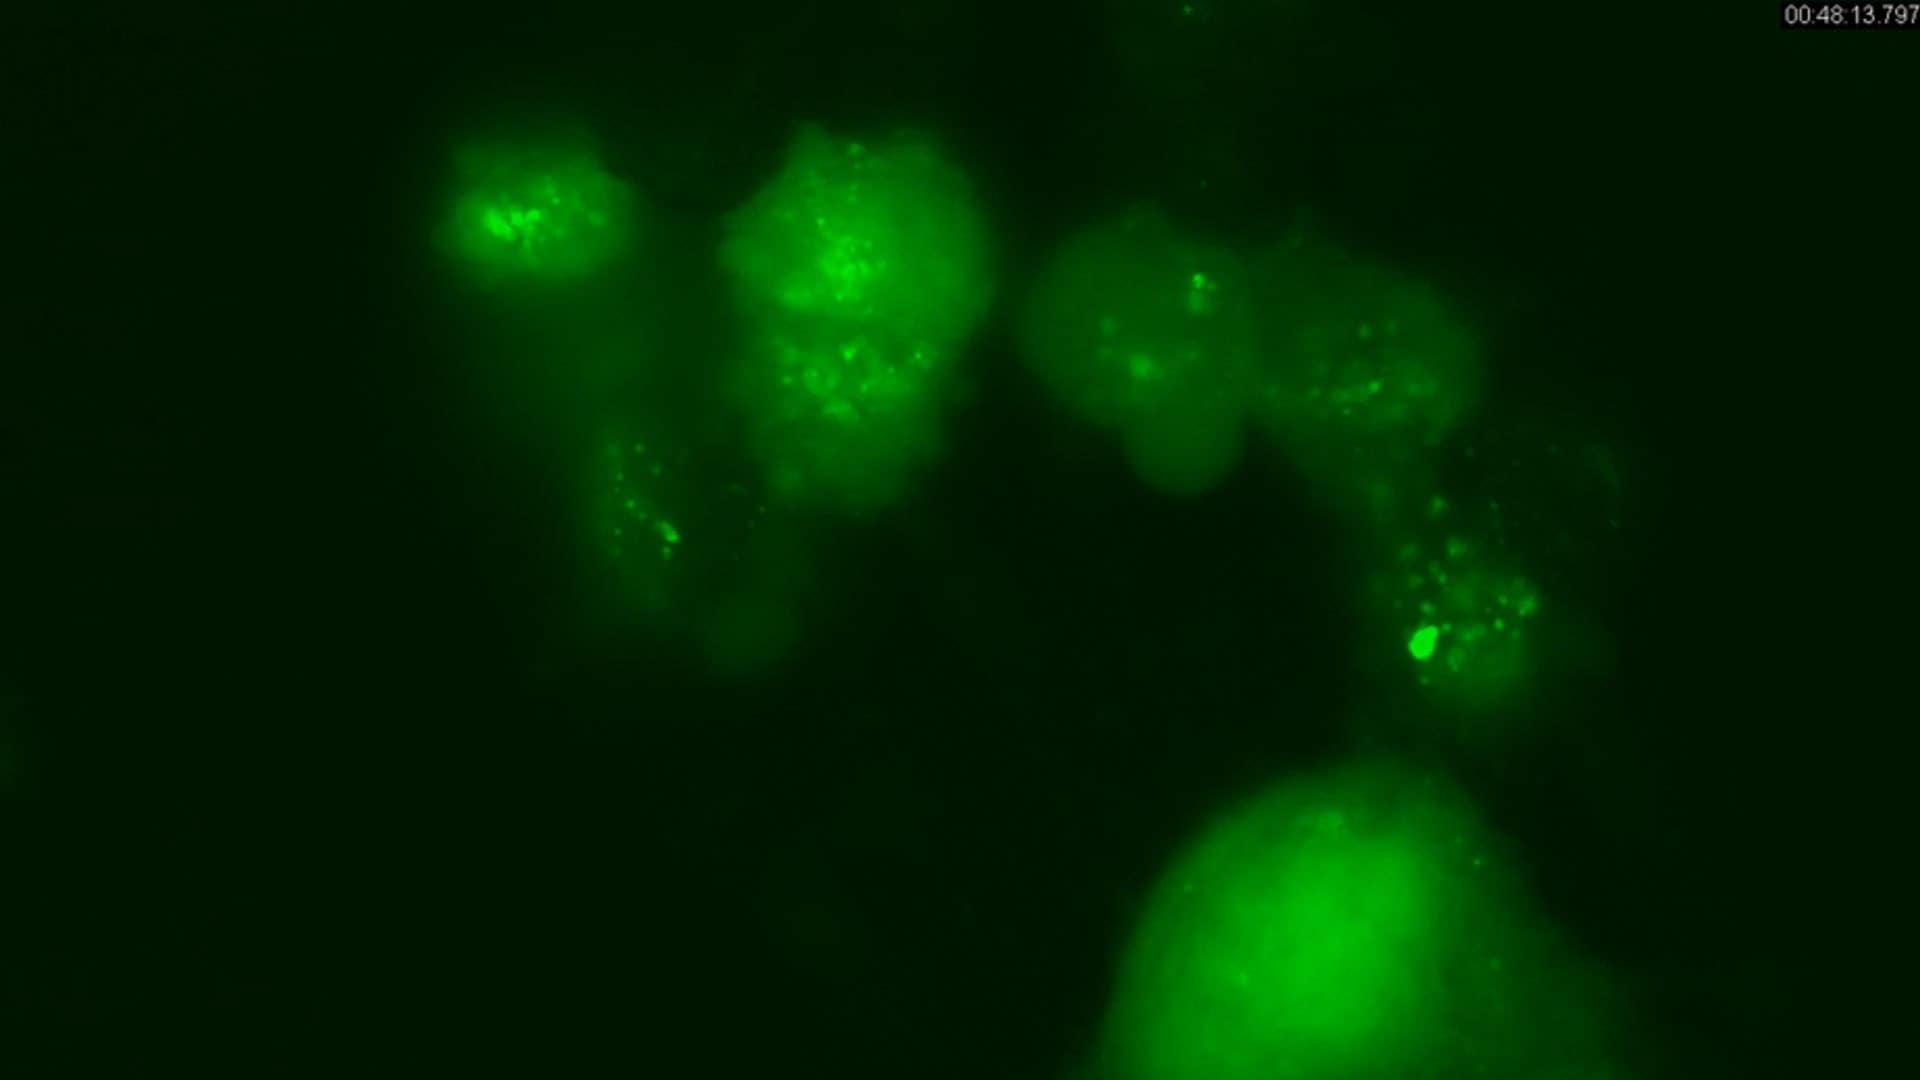 Live Cell Imaging of Autophagy using LentiBrite™ Fluorescent Biosensors